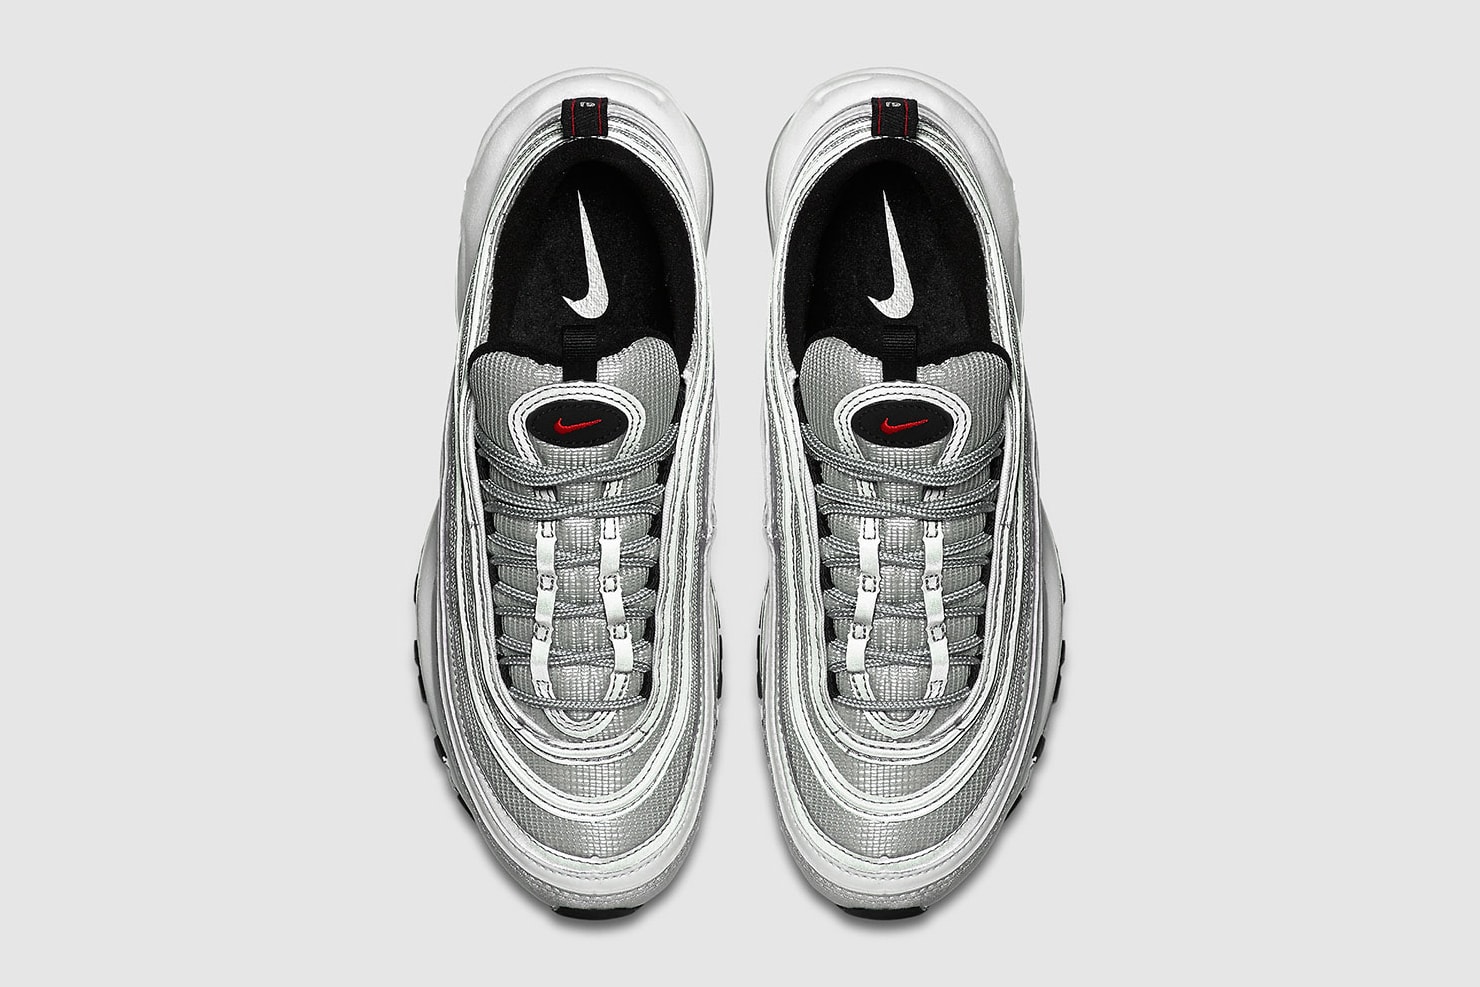 Nike Air Max 97 OG “Silver Bullet” Official Images